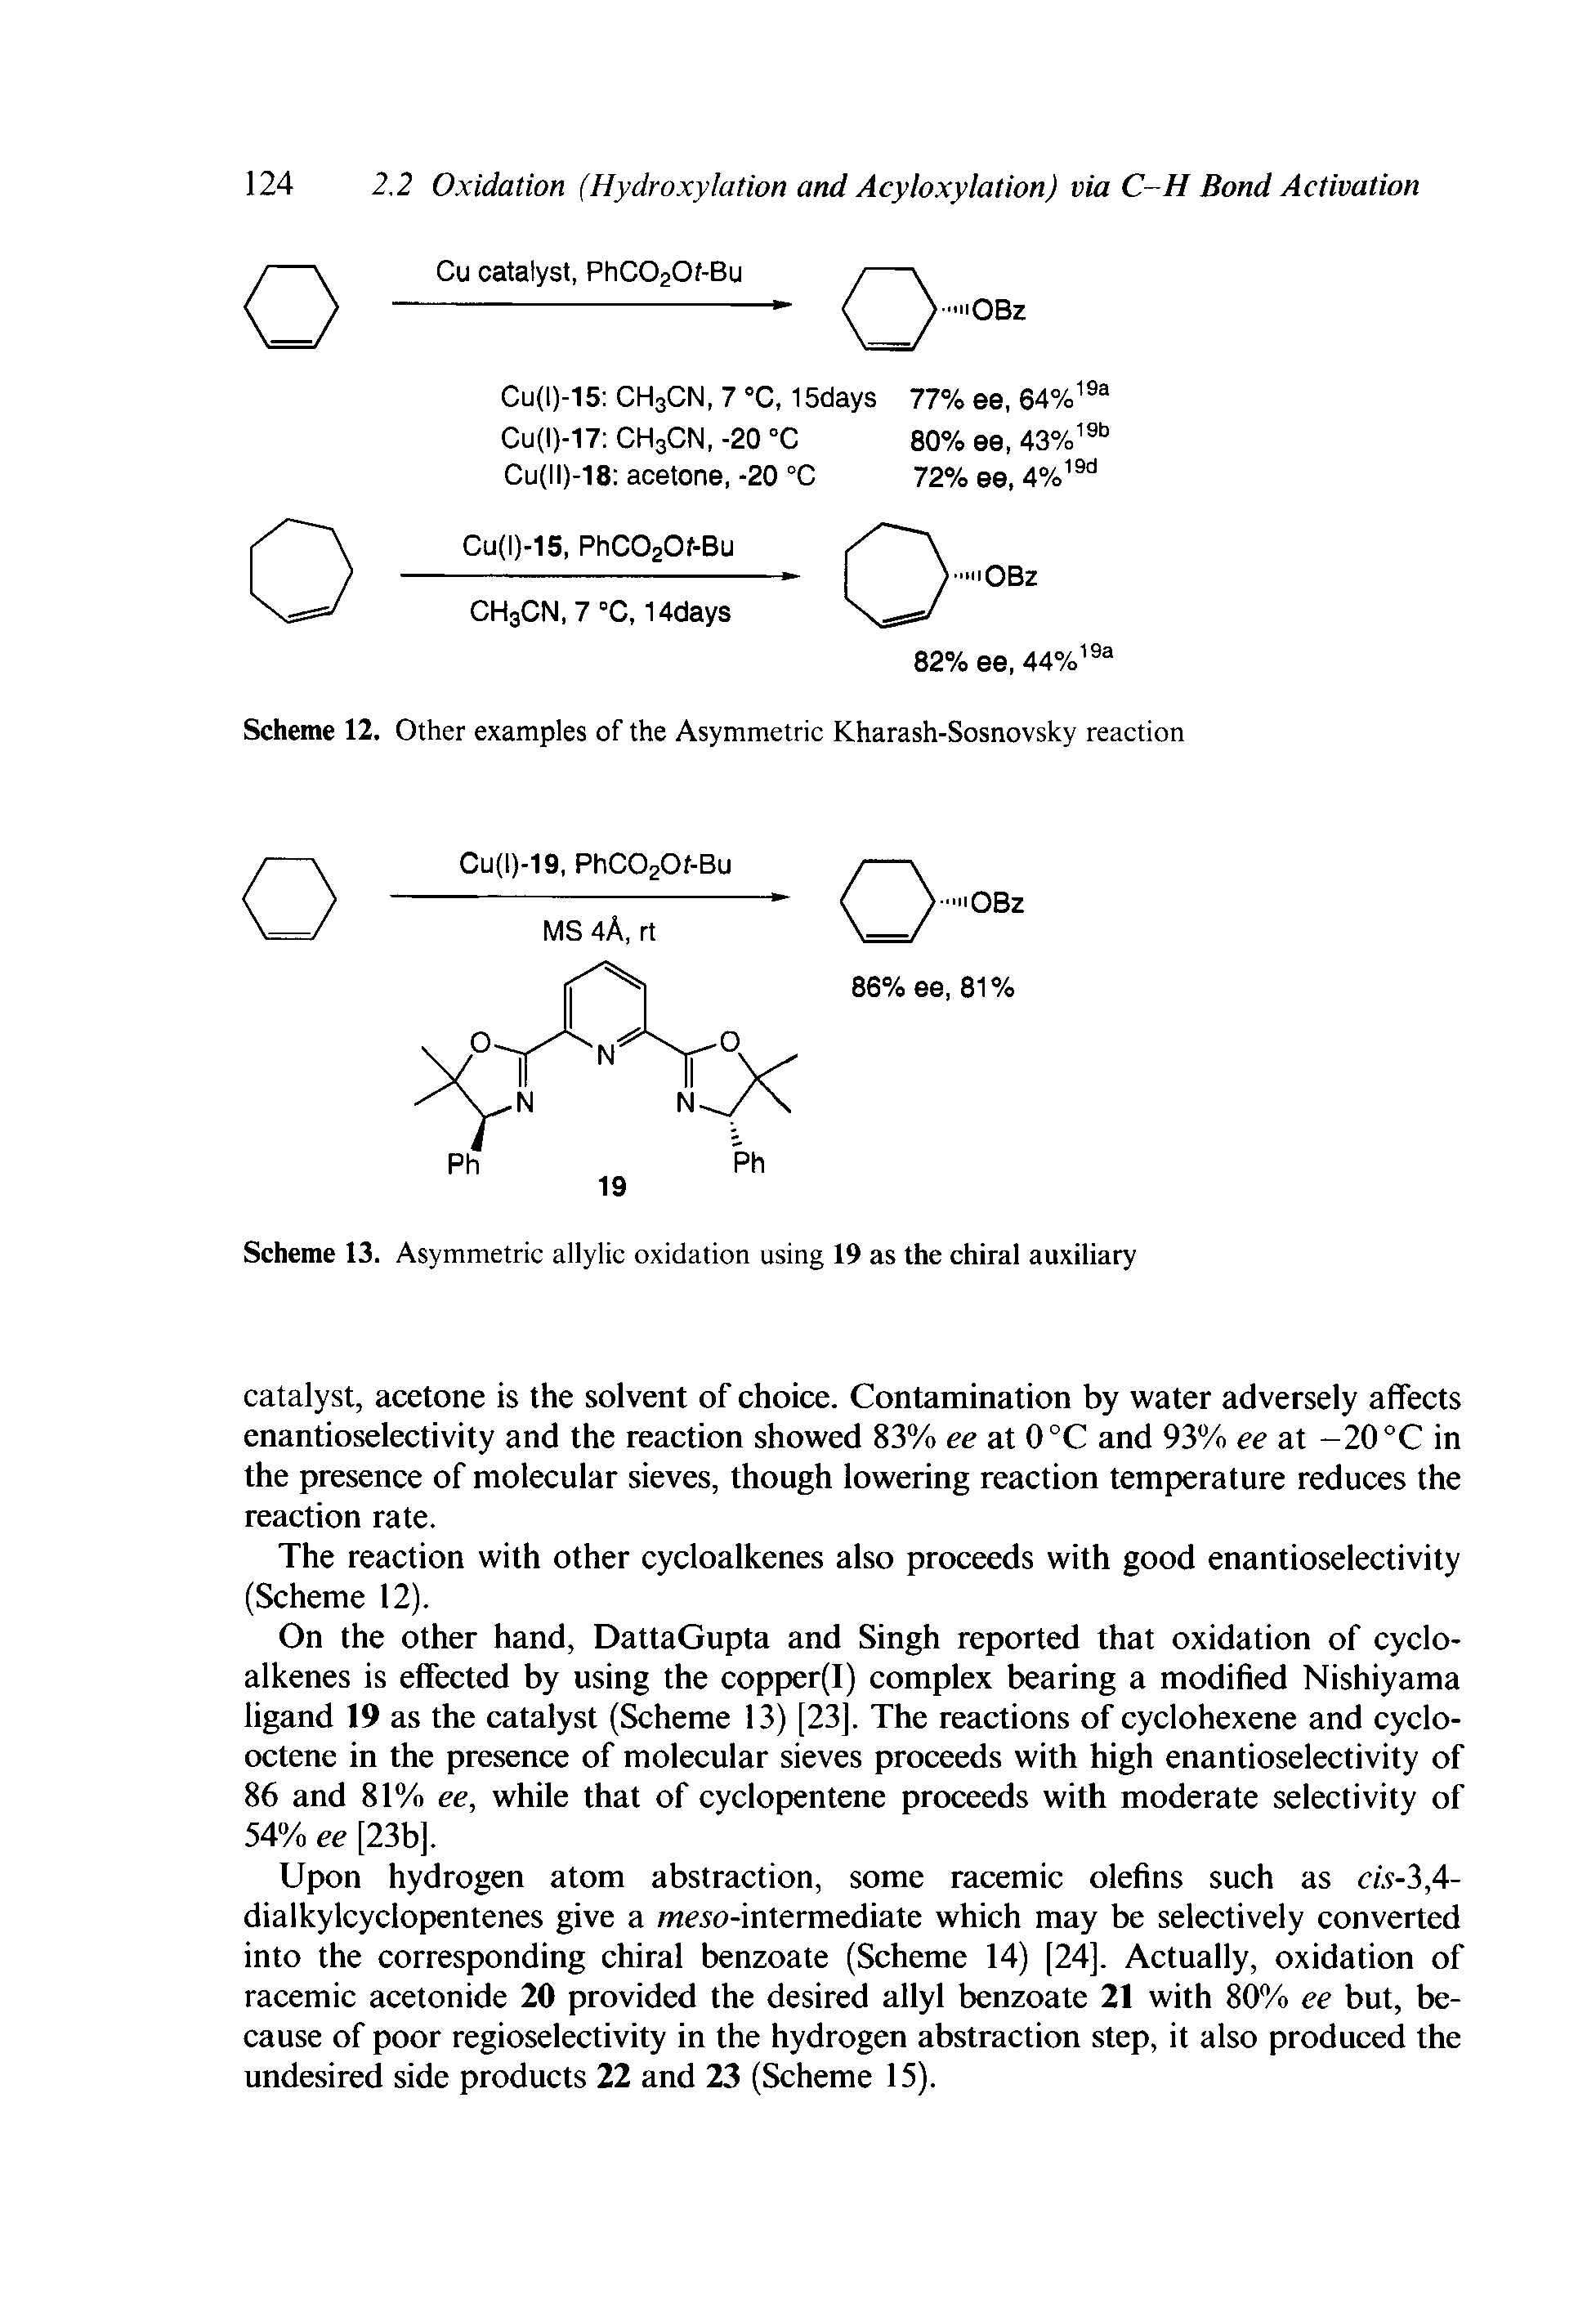 Scheme 12. Other examples of the Asymmetric Kharash-Sosnovsky reaction...